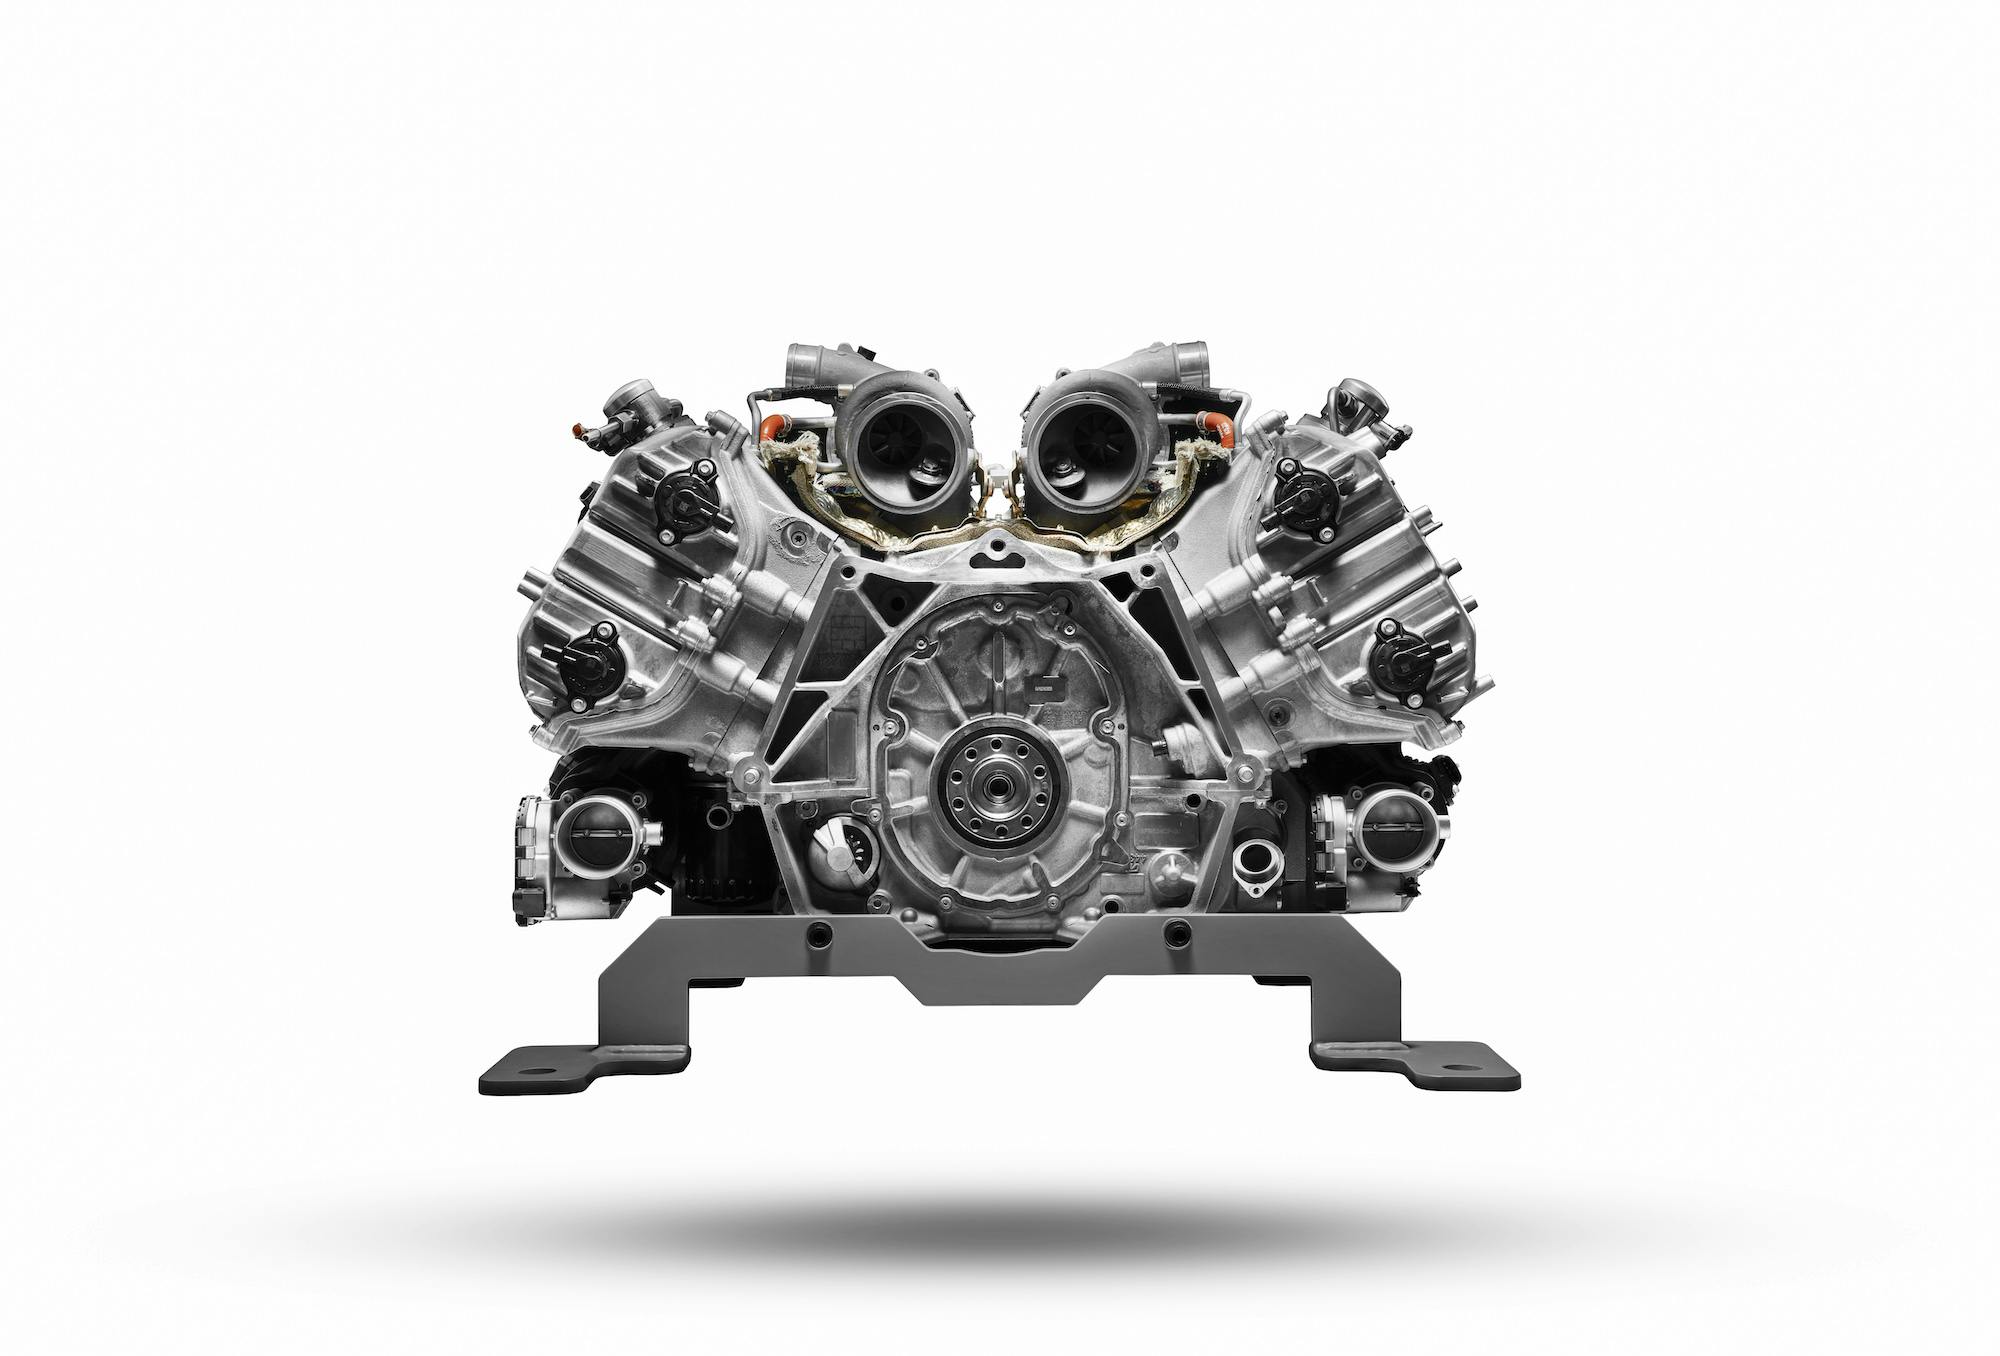 McLaren Artura engine